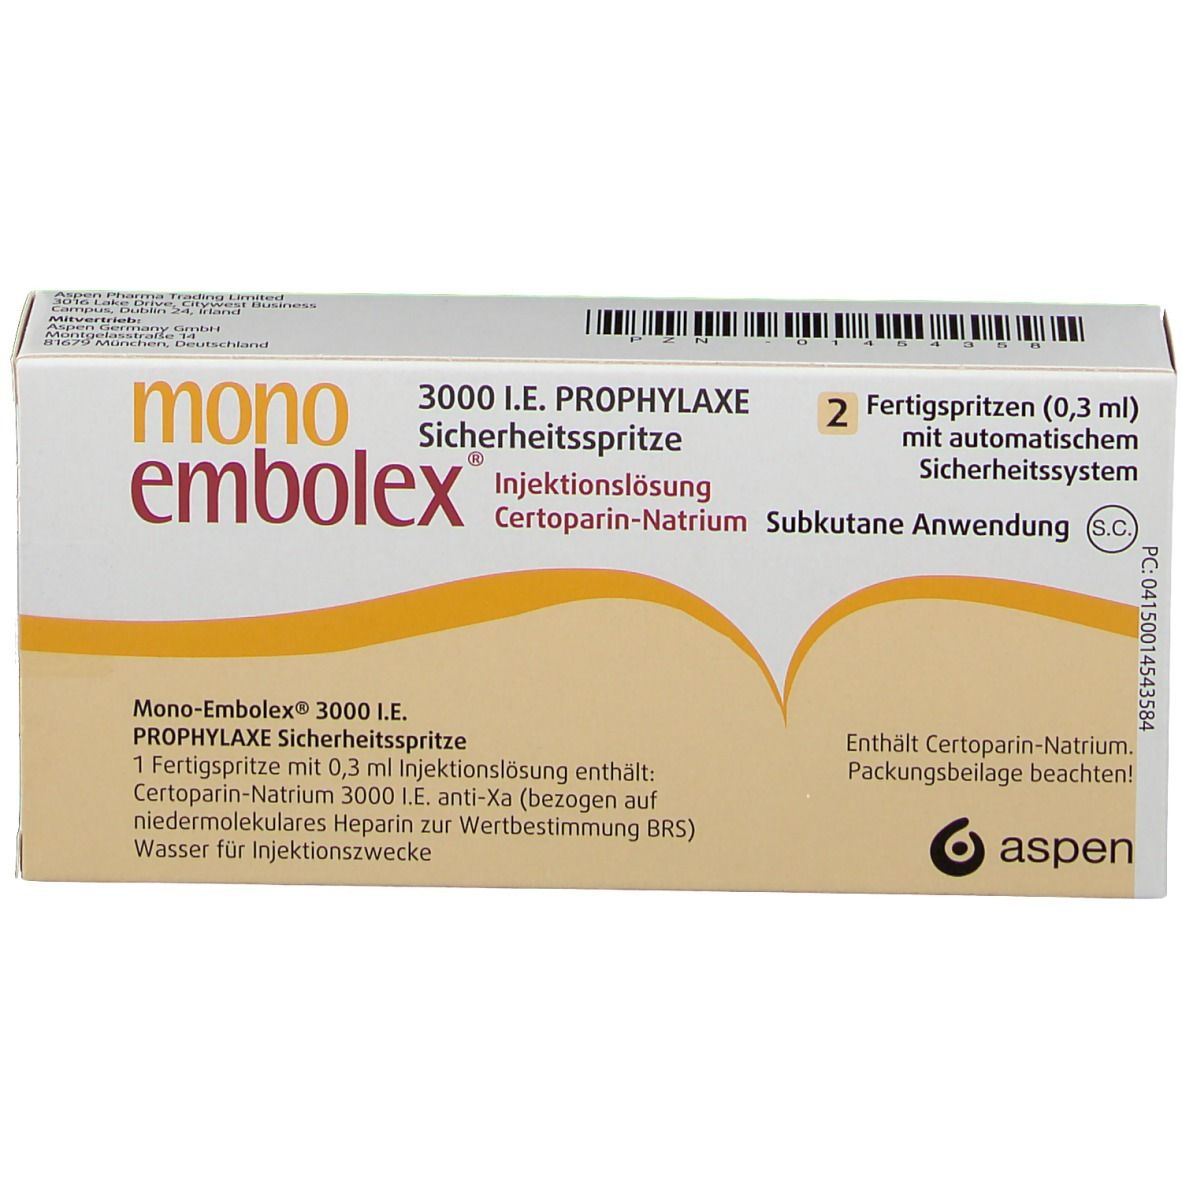 mono embolex® 3000 I.E. PROPHYLAXE